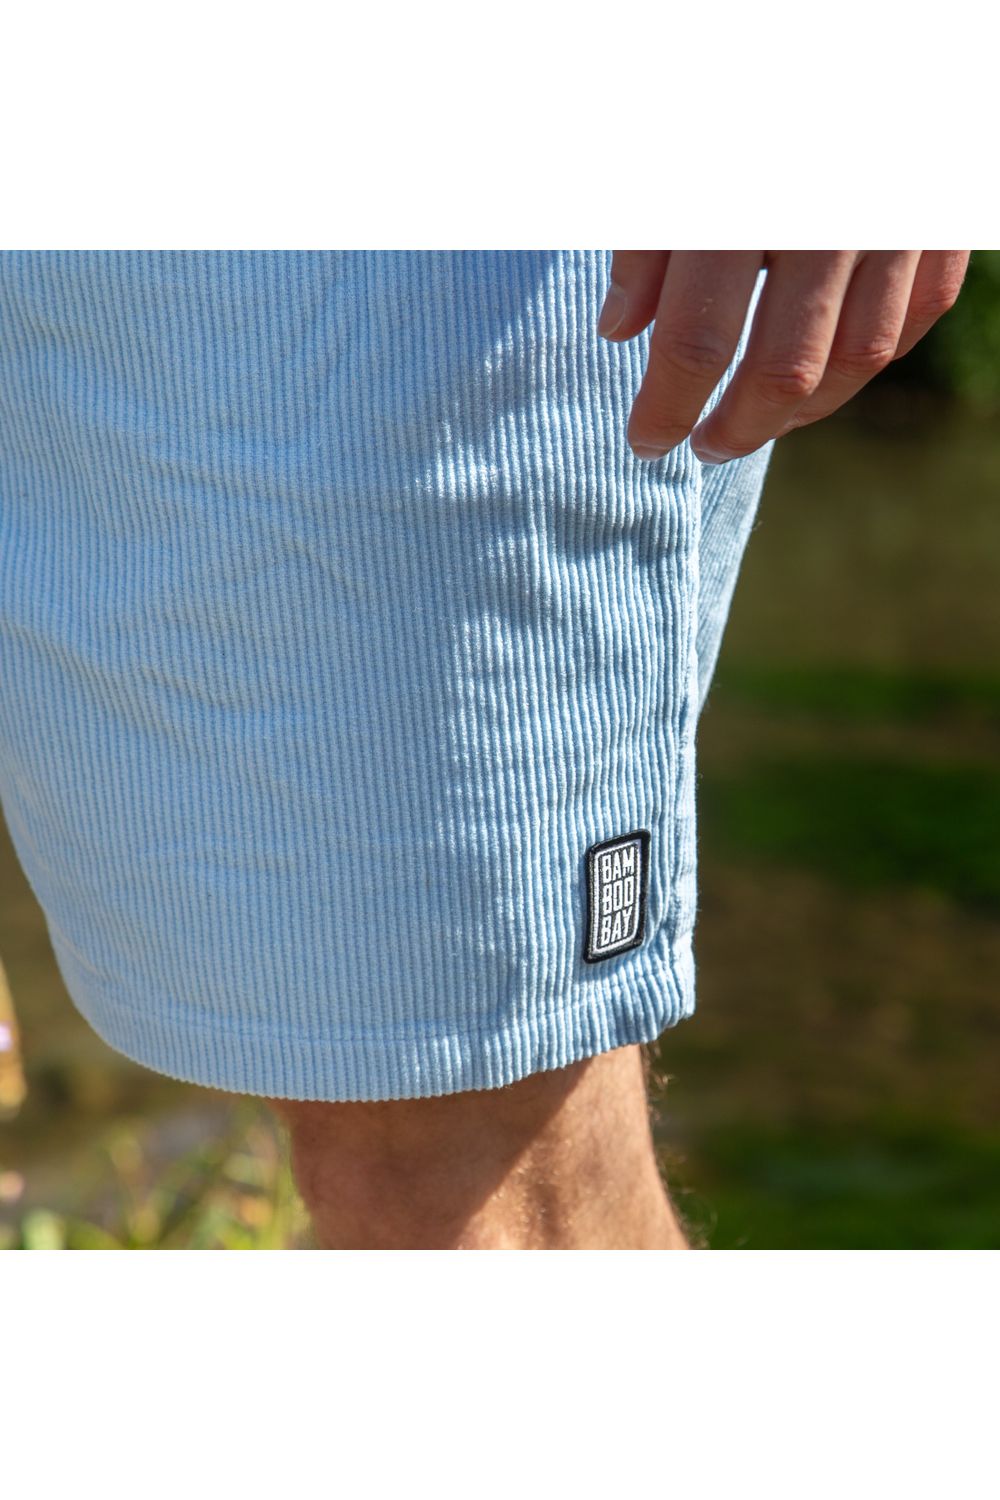 Bamboobay Cord Shorts in light blue front left leg logo